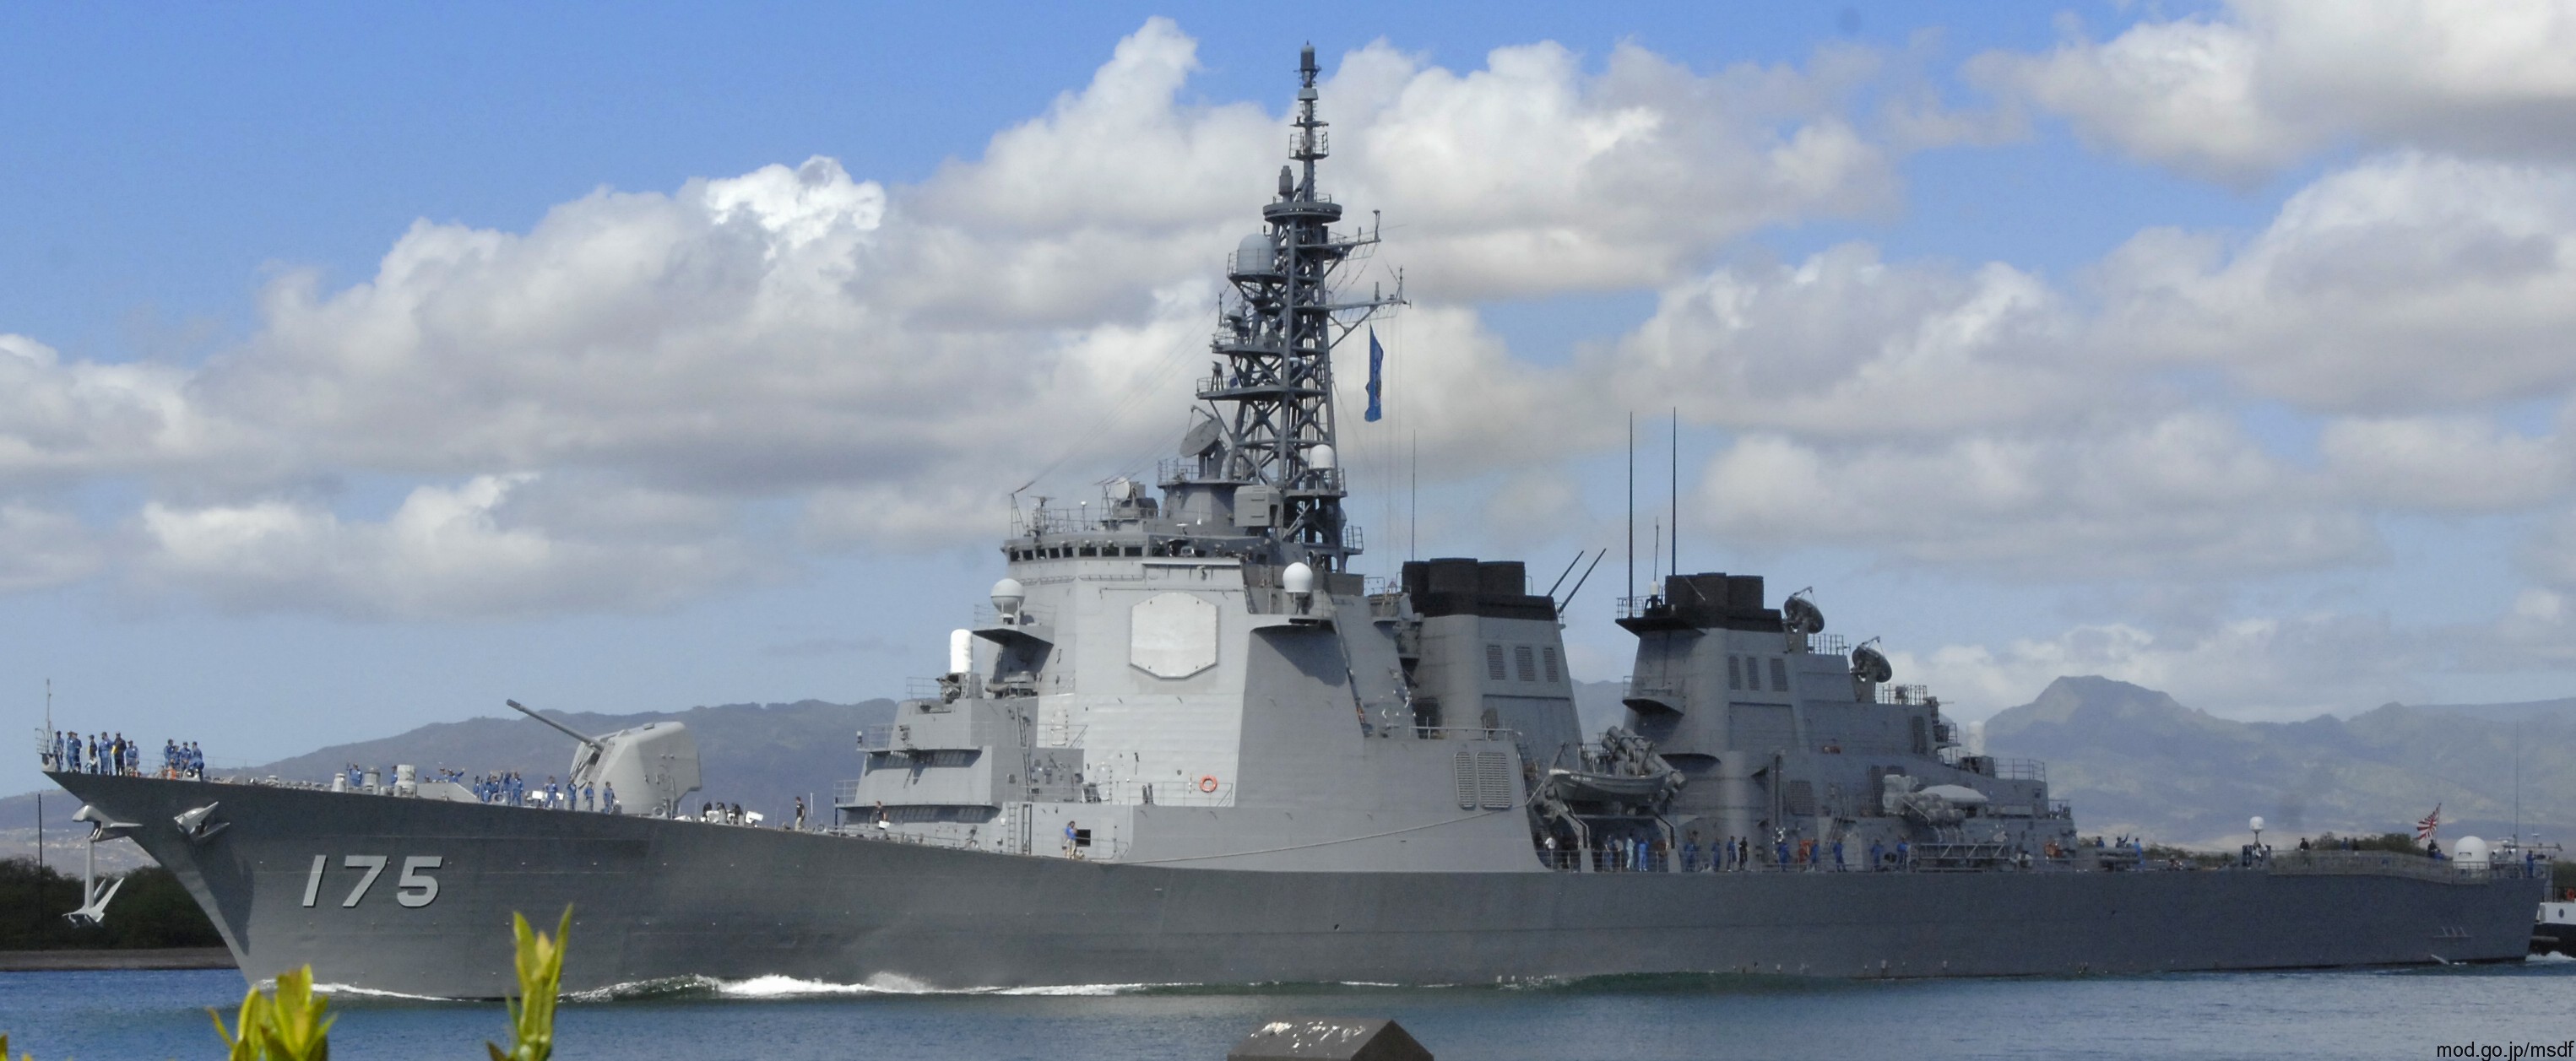 ddg-175 jds myoko kongou class destroyer japan maritime self defense force jmsdf 02